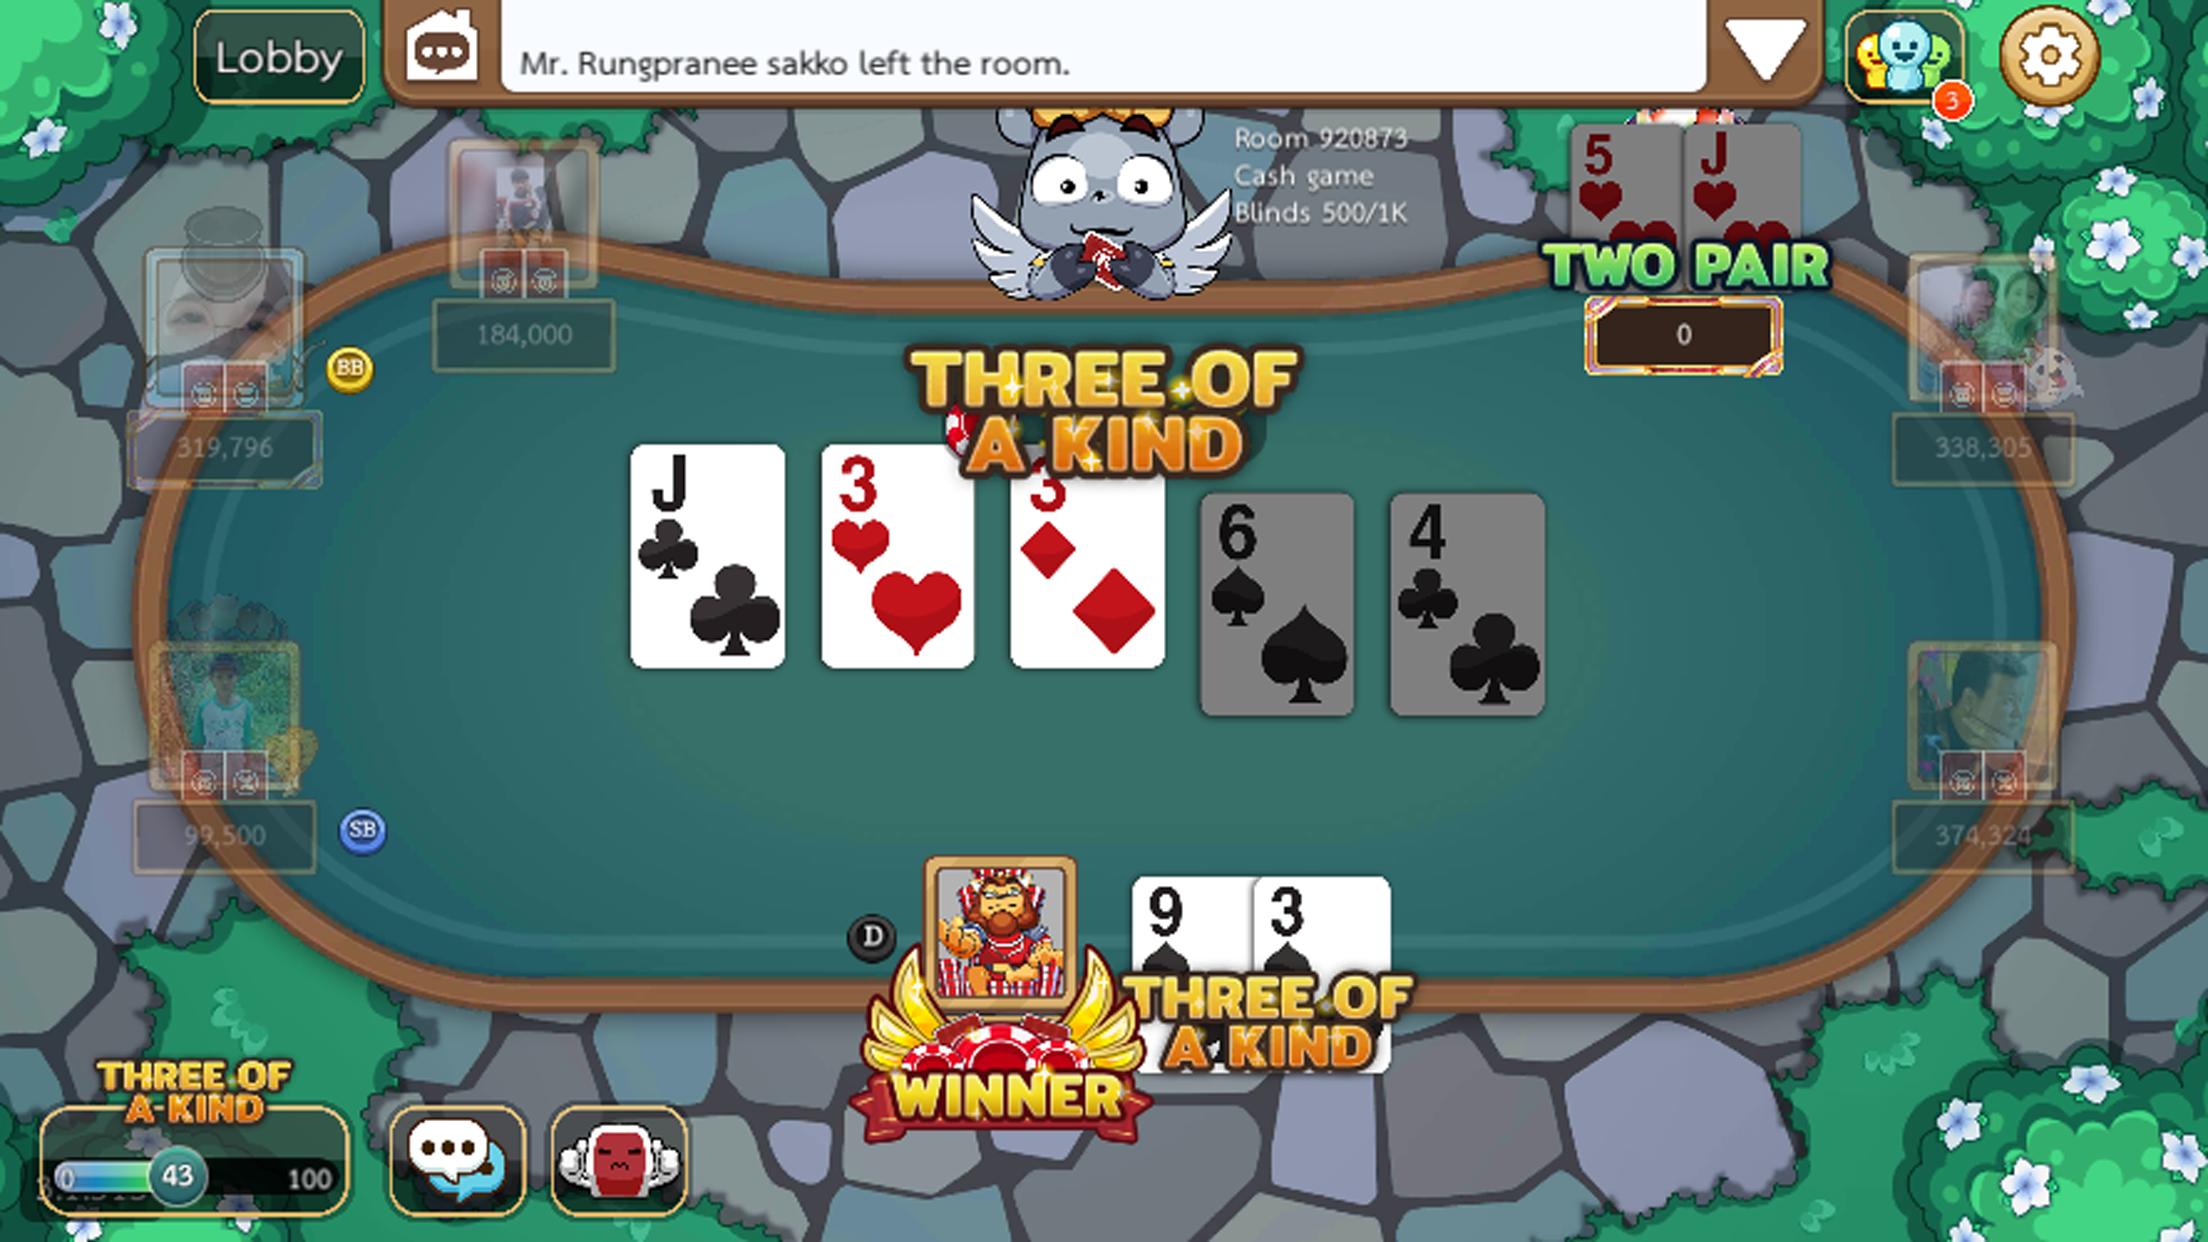 Dummy & Toon Poker Texas slot Online Card Game 3.4.691 Screenshot 16